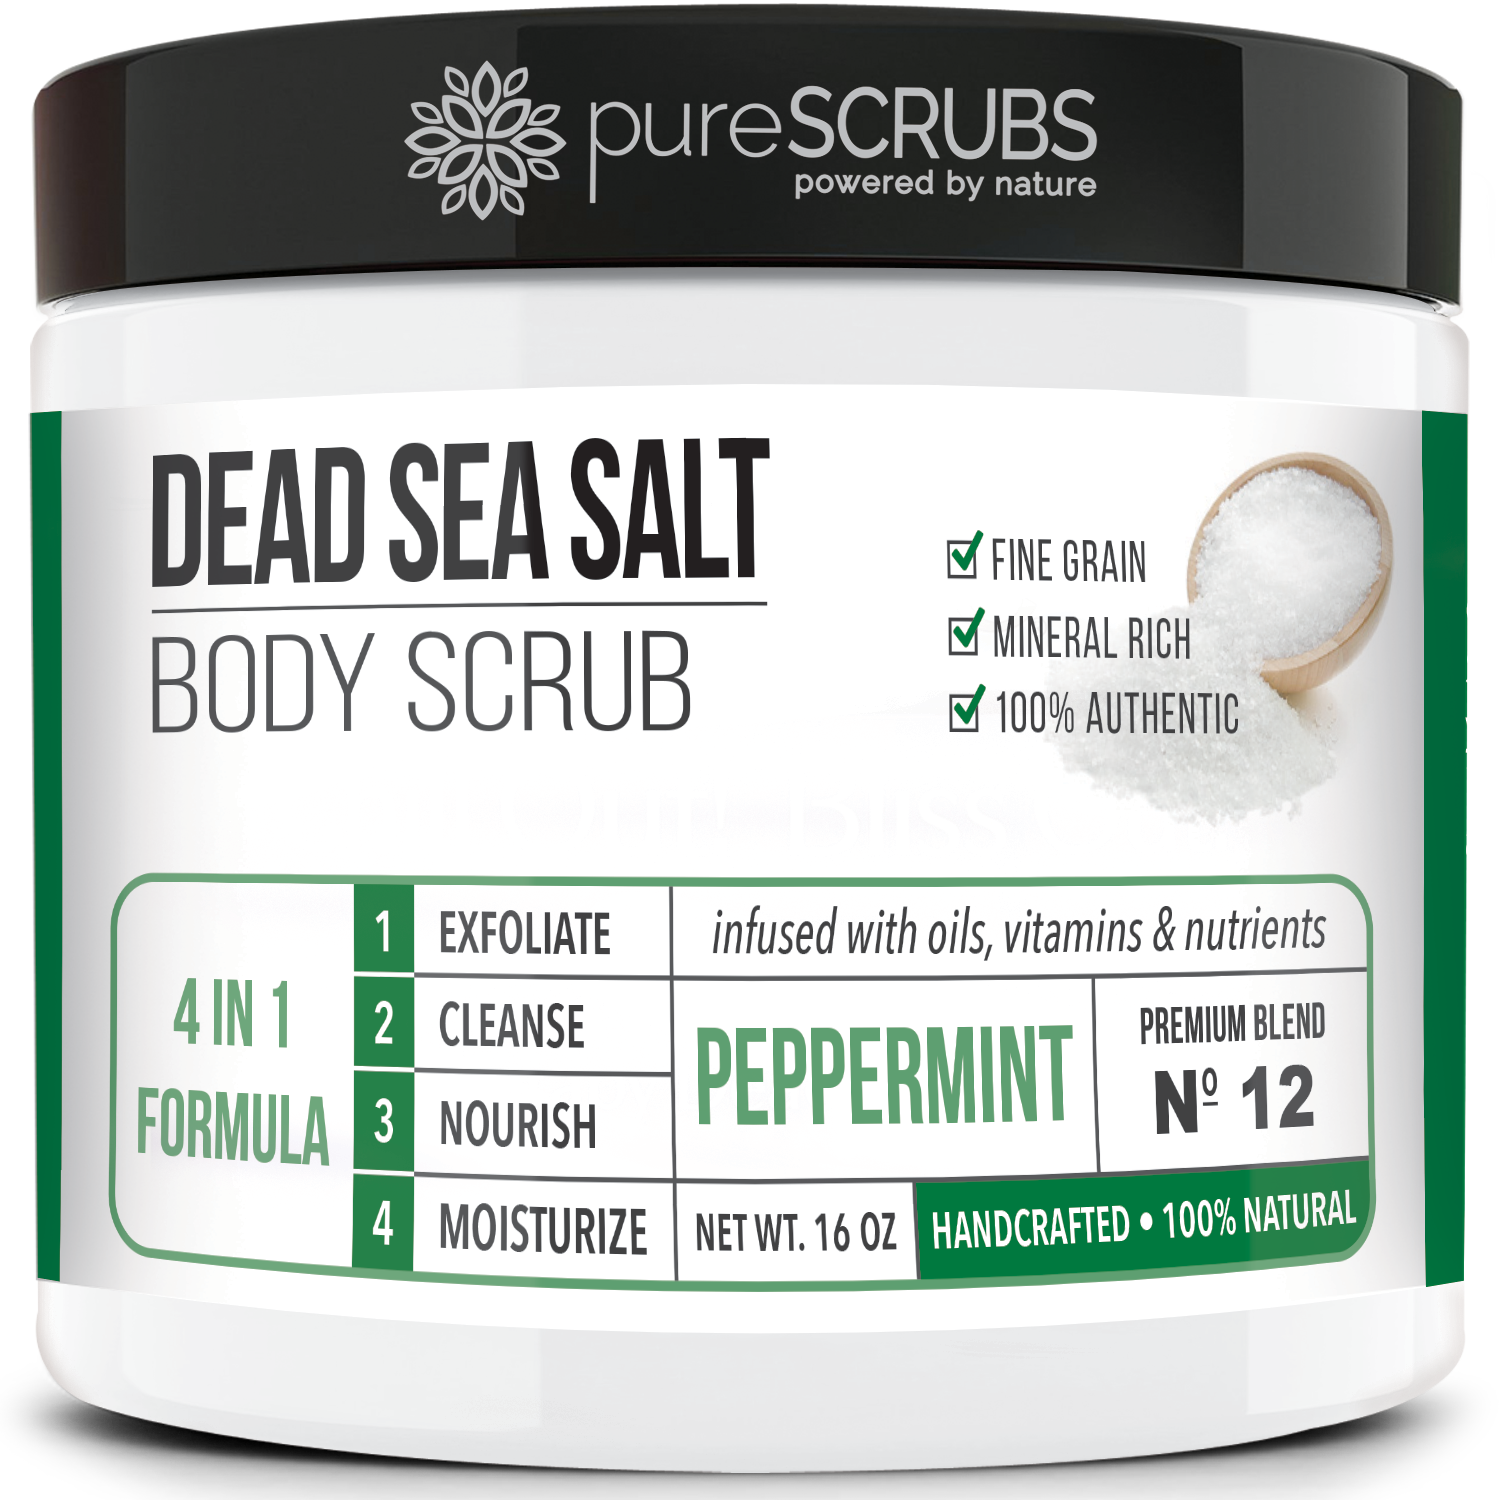 Peppermint Body Scrub / Dead Sea Salt / Premium Blend #12